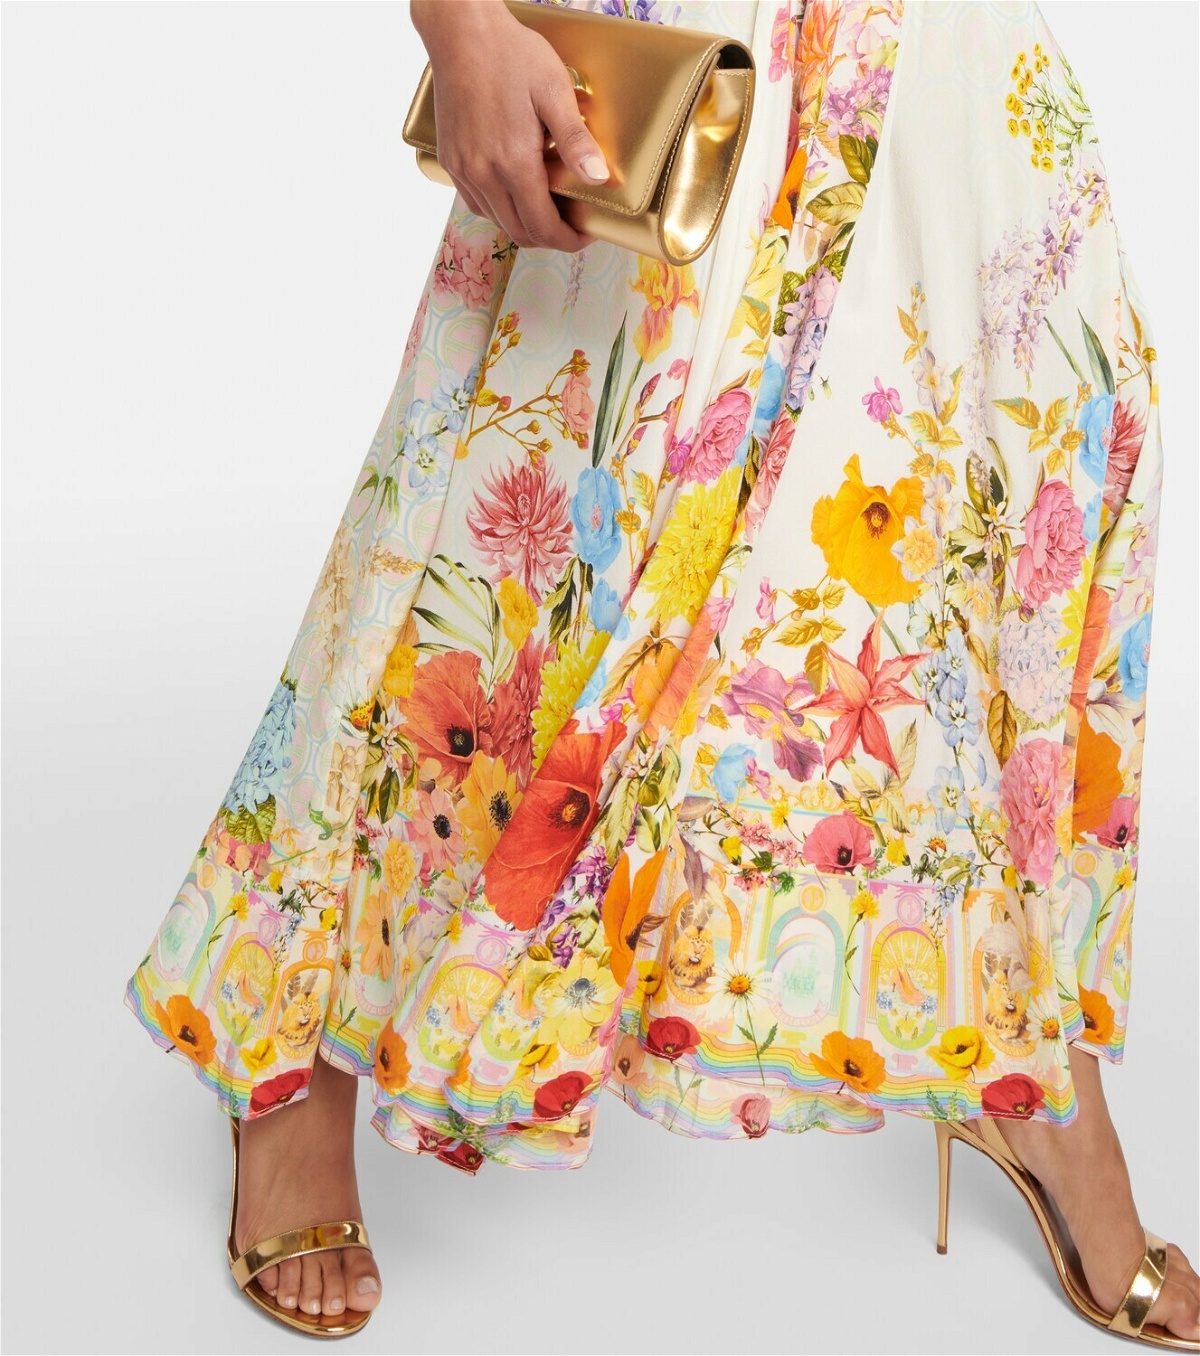 Camilla Sunlight Symphony silk maxi dress